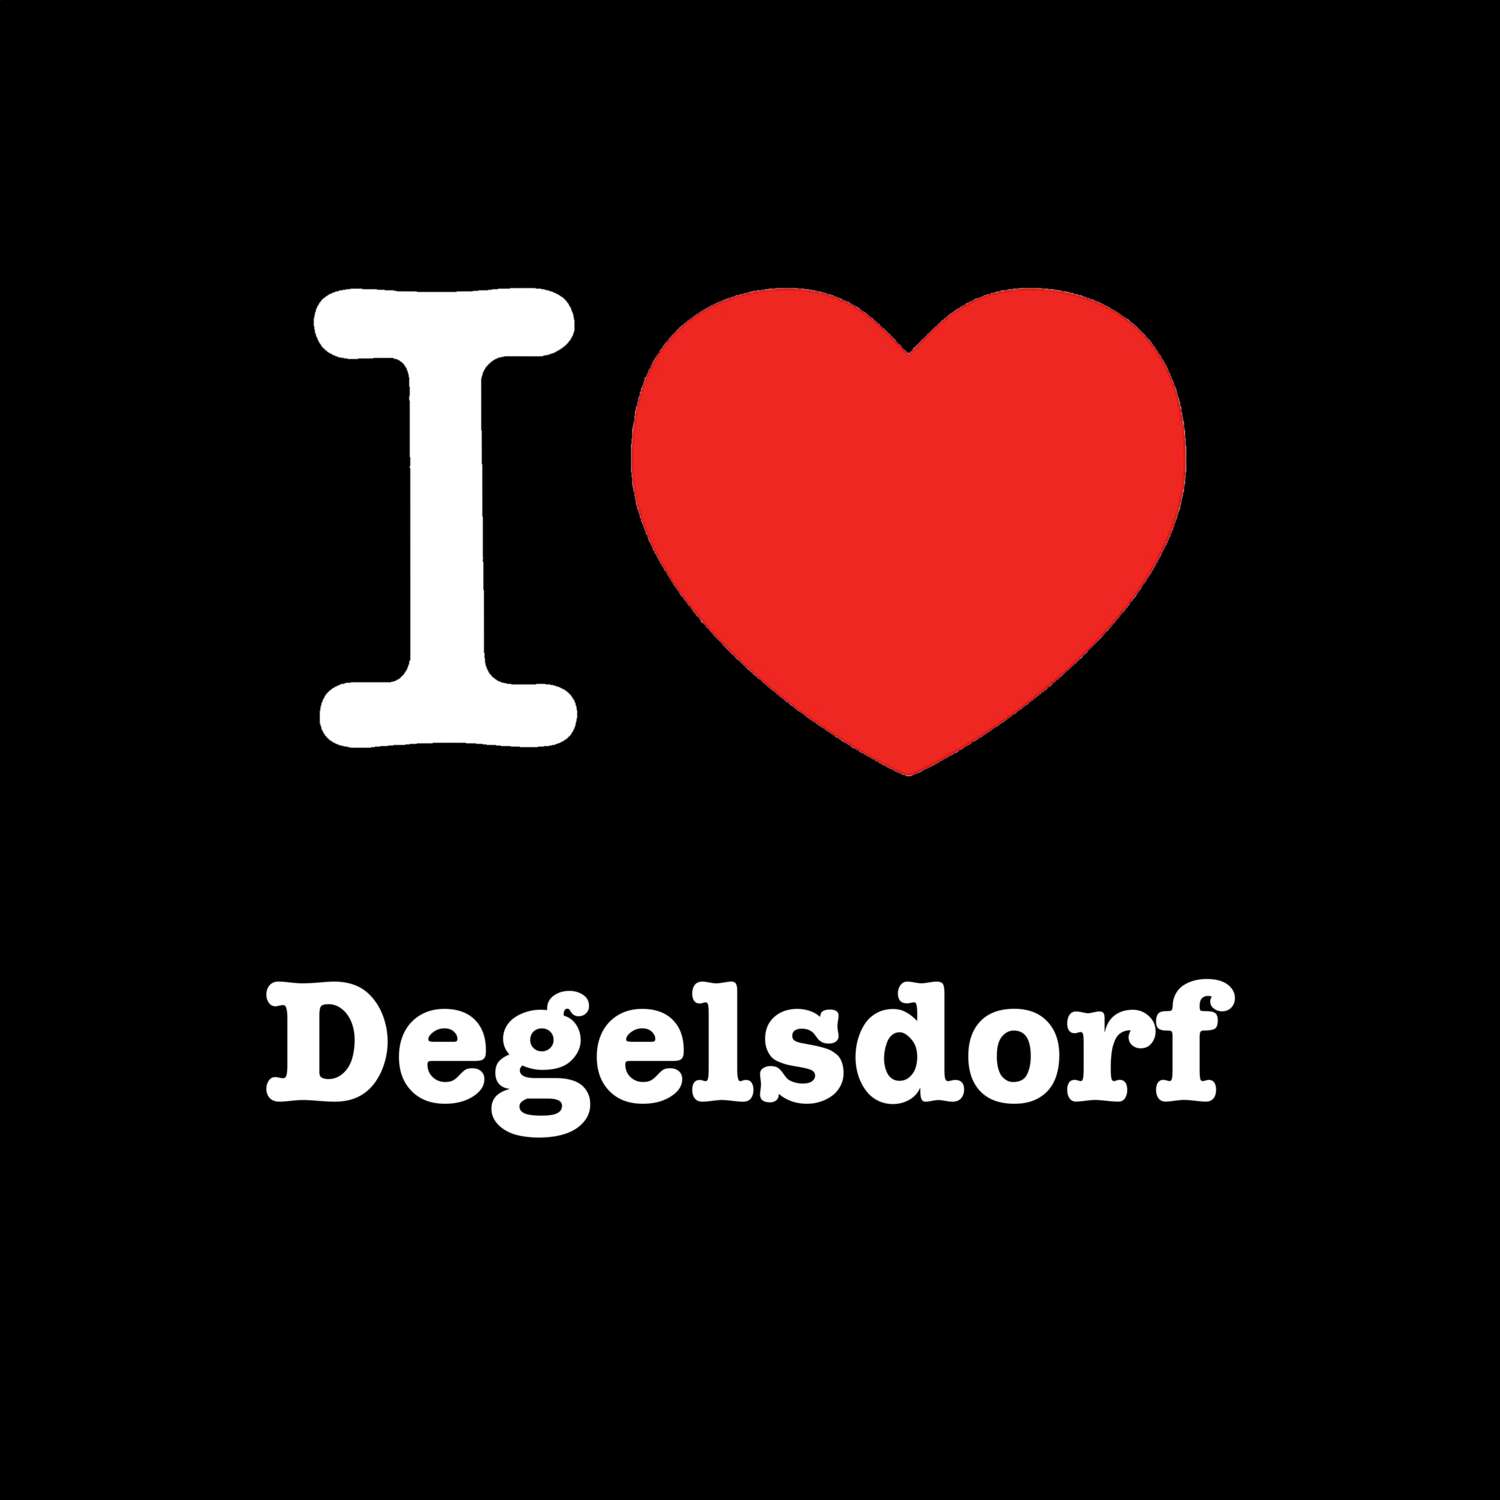 Degelsdorf T-Shirt »I love«